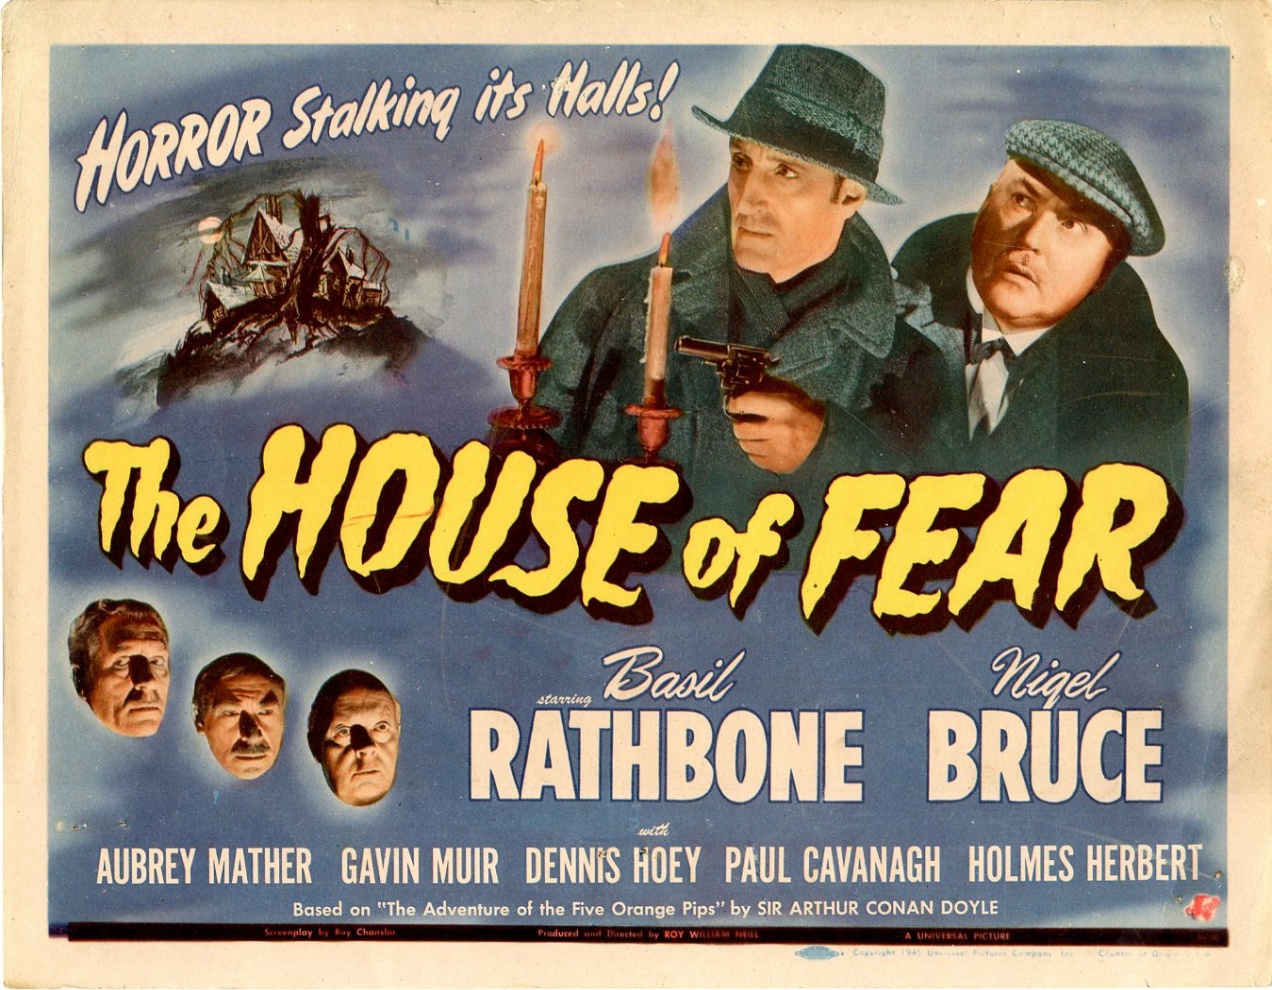 The House of Fear - The Arthur Conan Doyle Encyclopedia